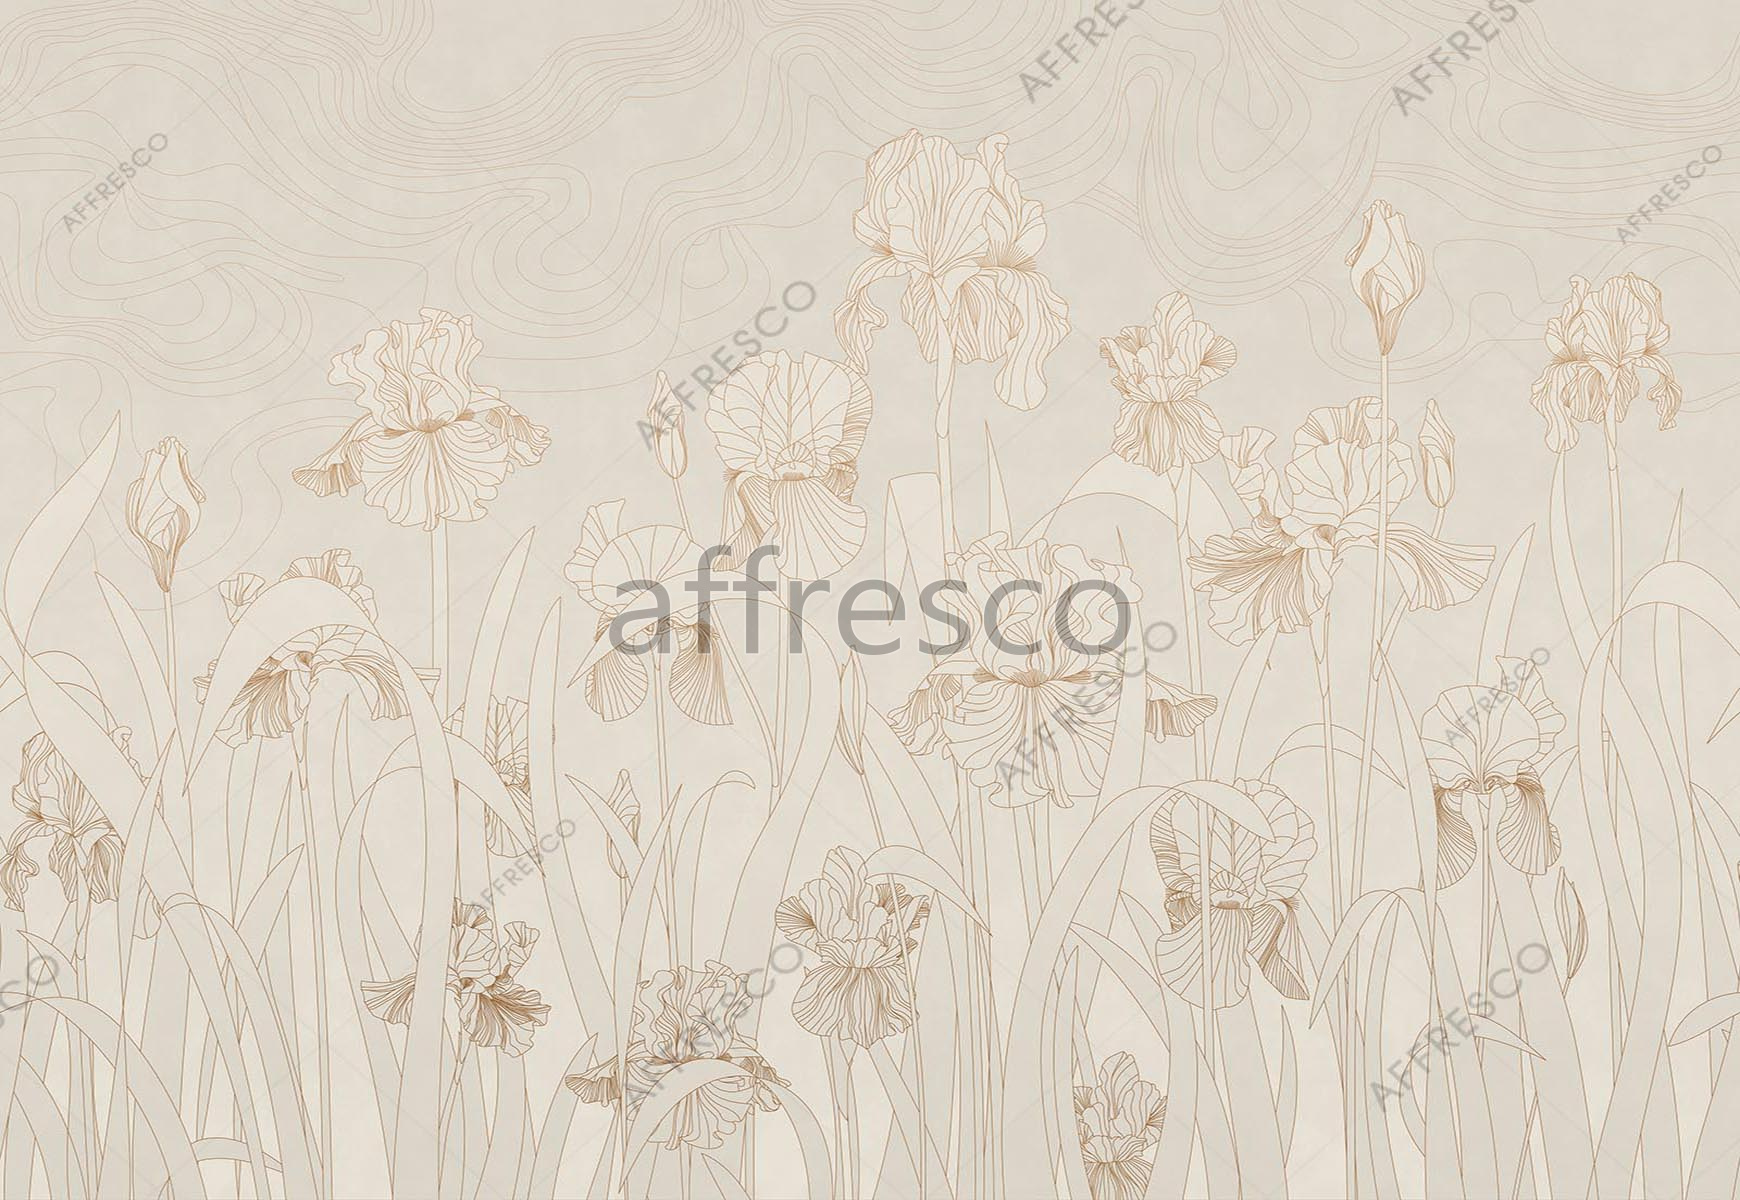 ID139178 | Flowers | Ireses field | Affresco Factory